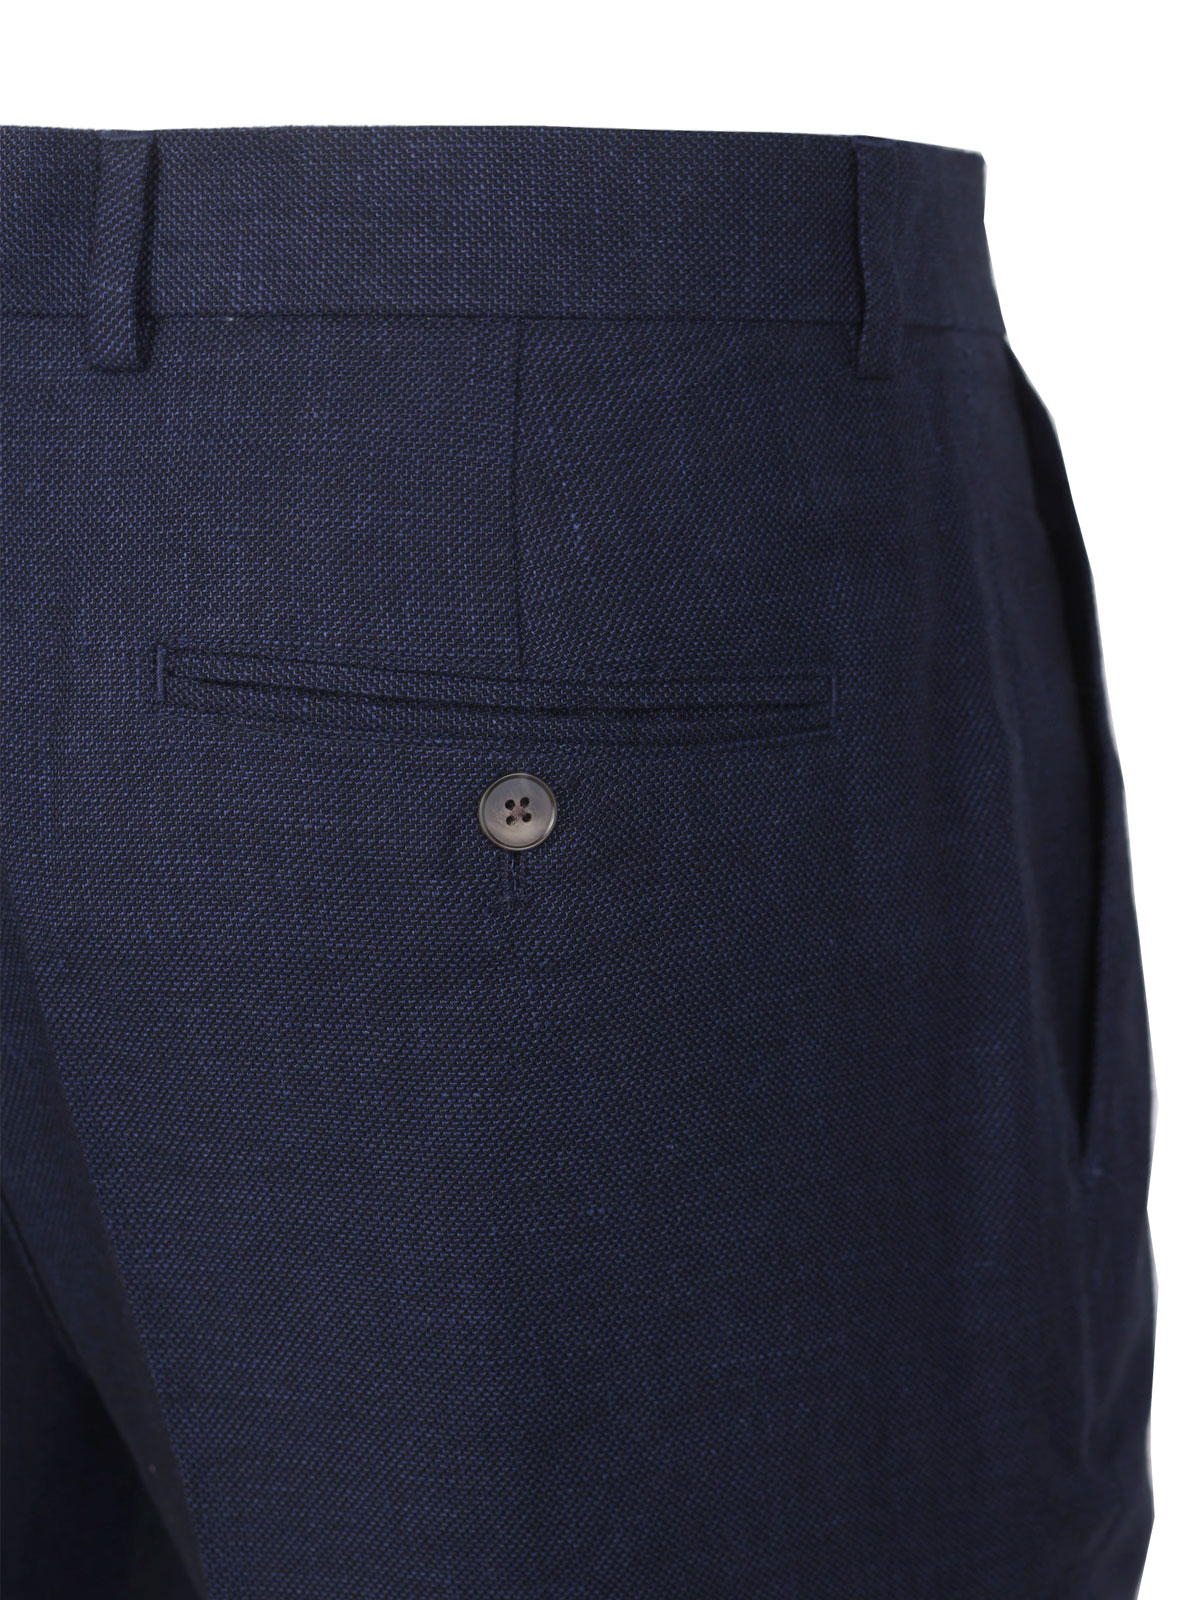 Pantaloni scurti din in albastru inchis - 67097 € 47.24 img3